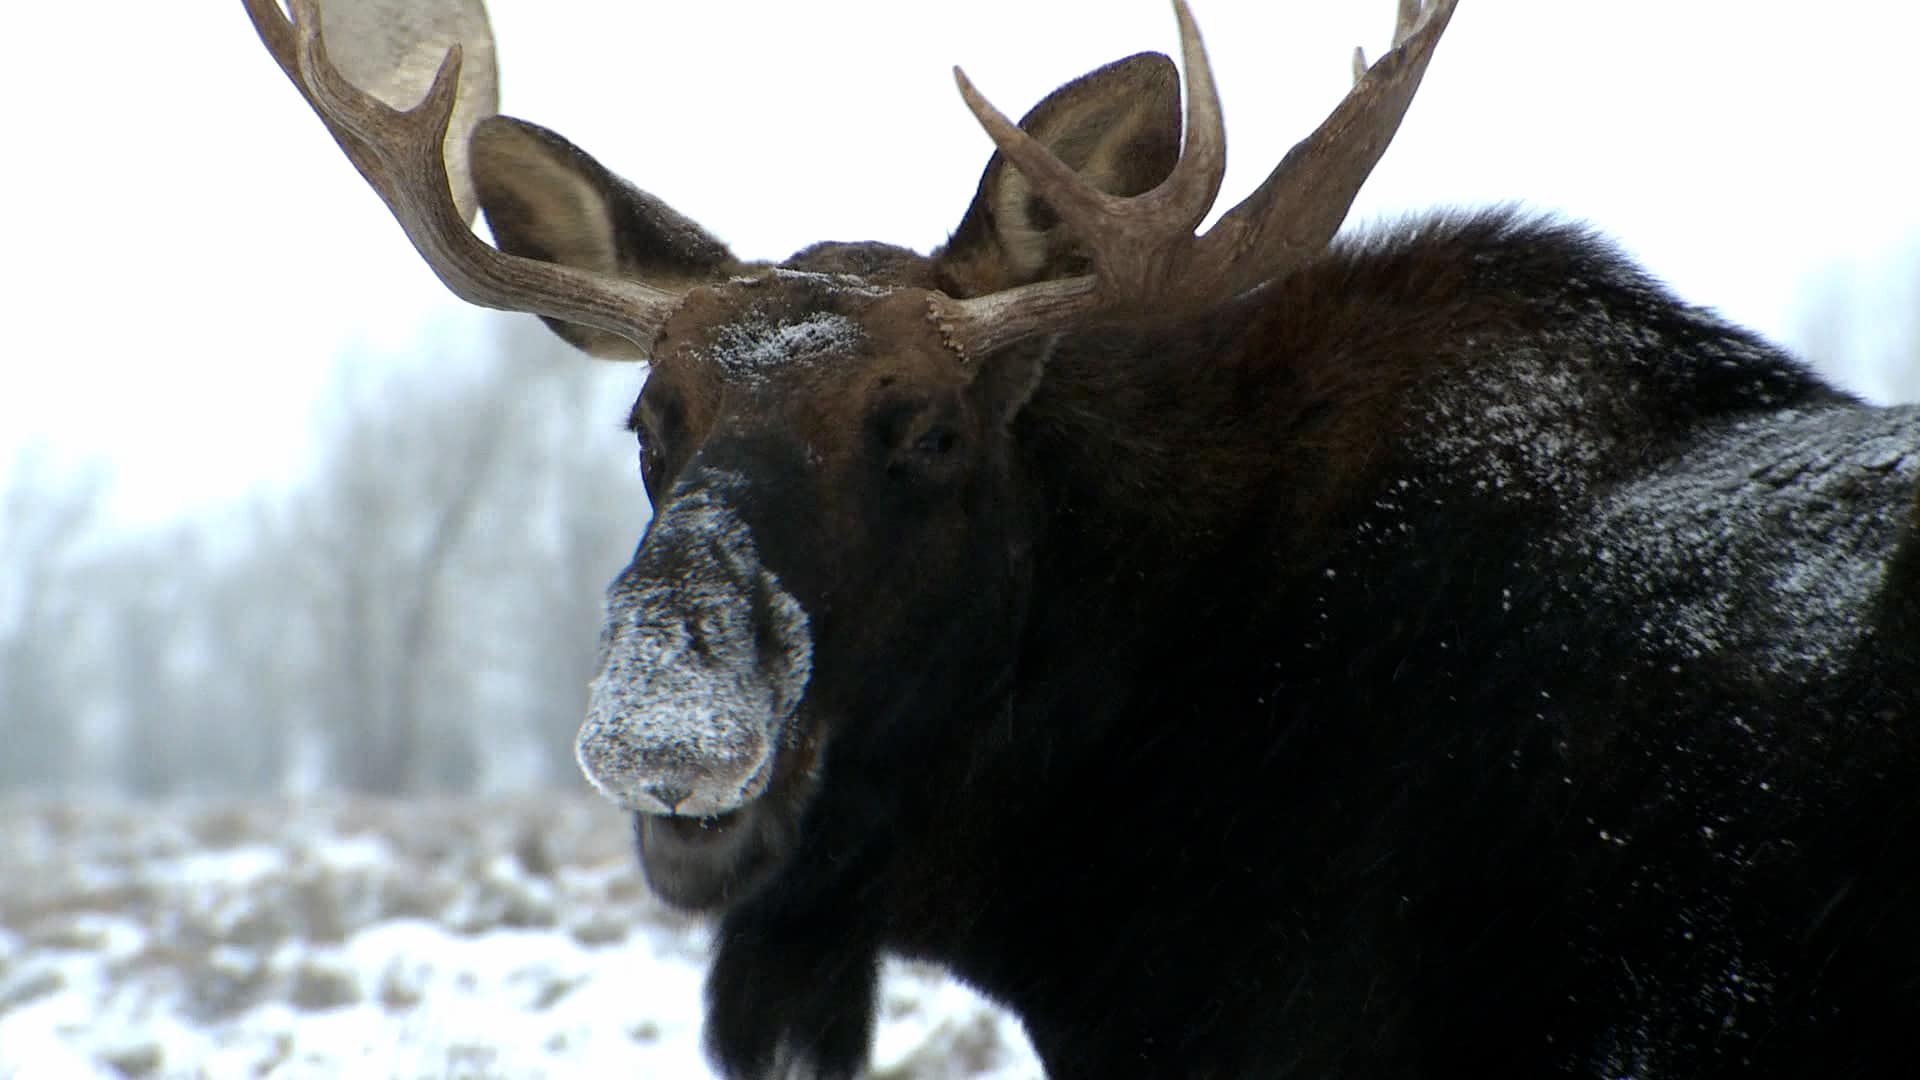 A talking moose, looking at the camera disapprovingly